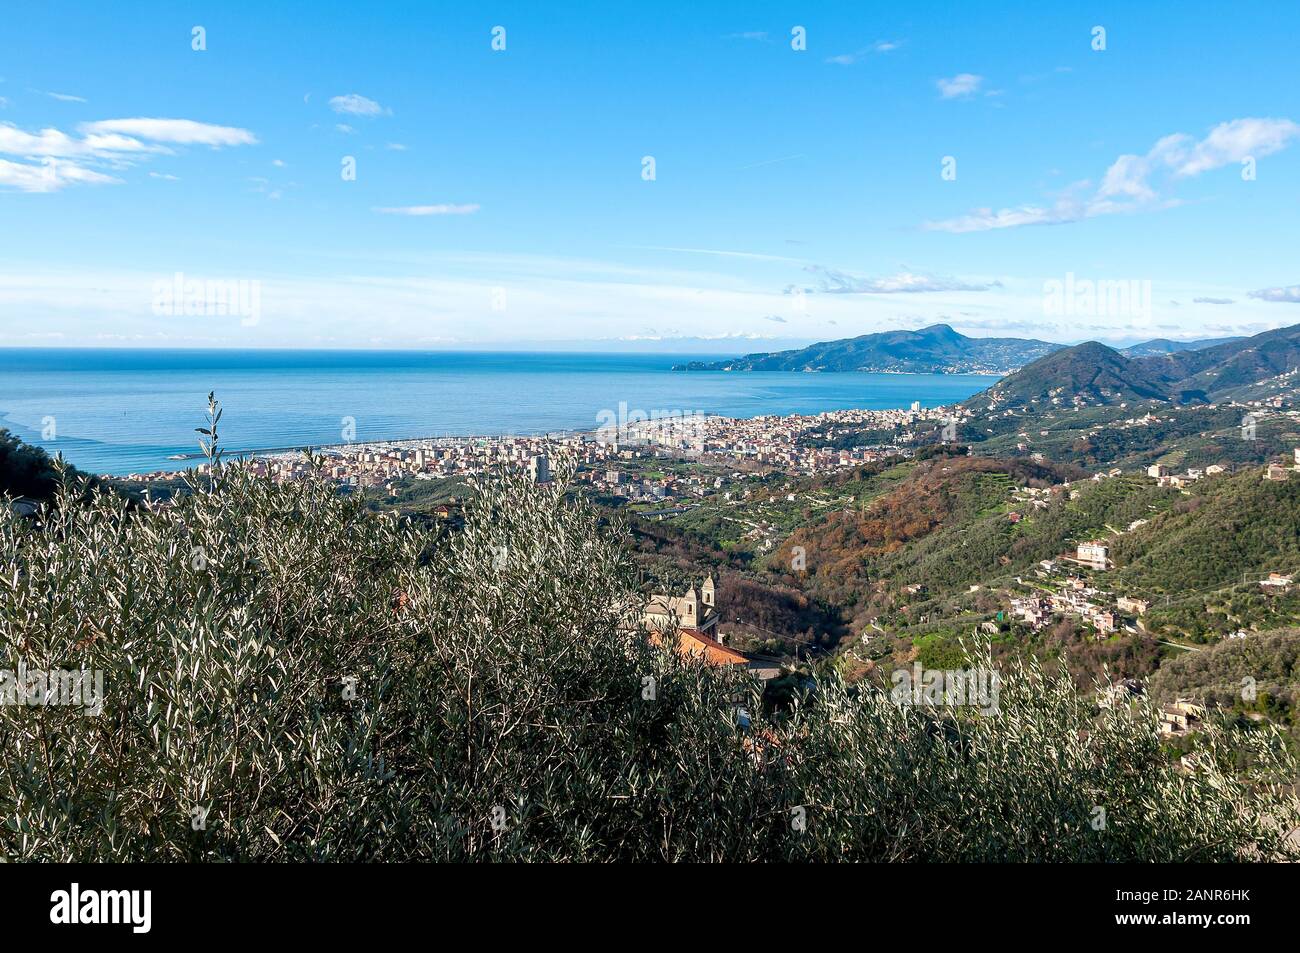 Vista del Golfo Tigullio - Chiavari, Cogorno, Lavagna e Portofino - Mar  Ligure - Italia Foto stock - Alamy